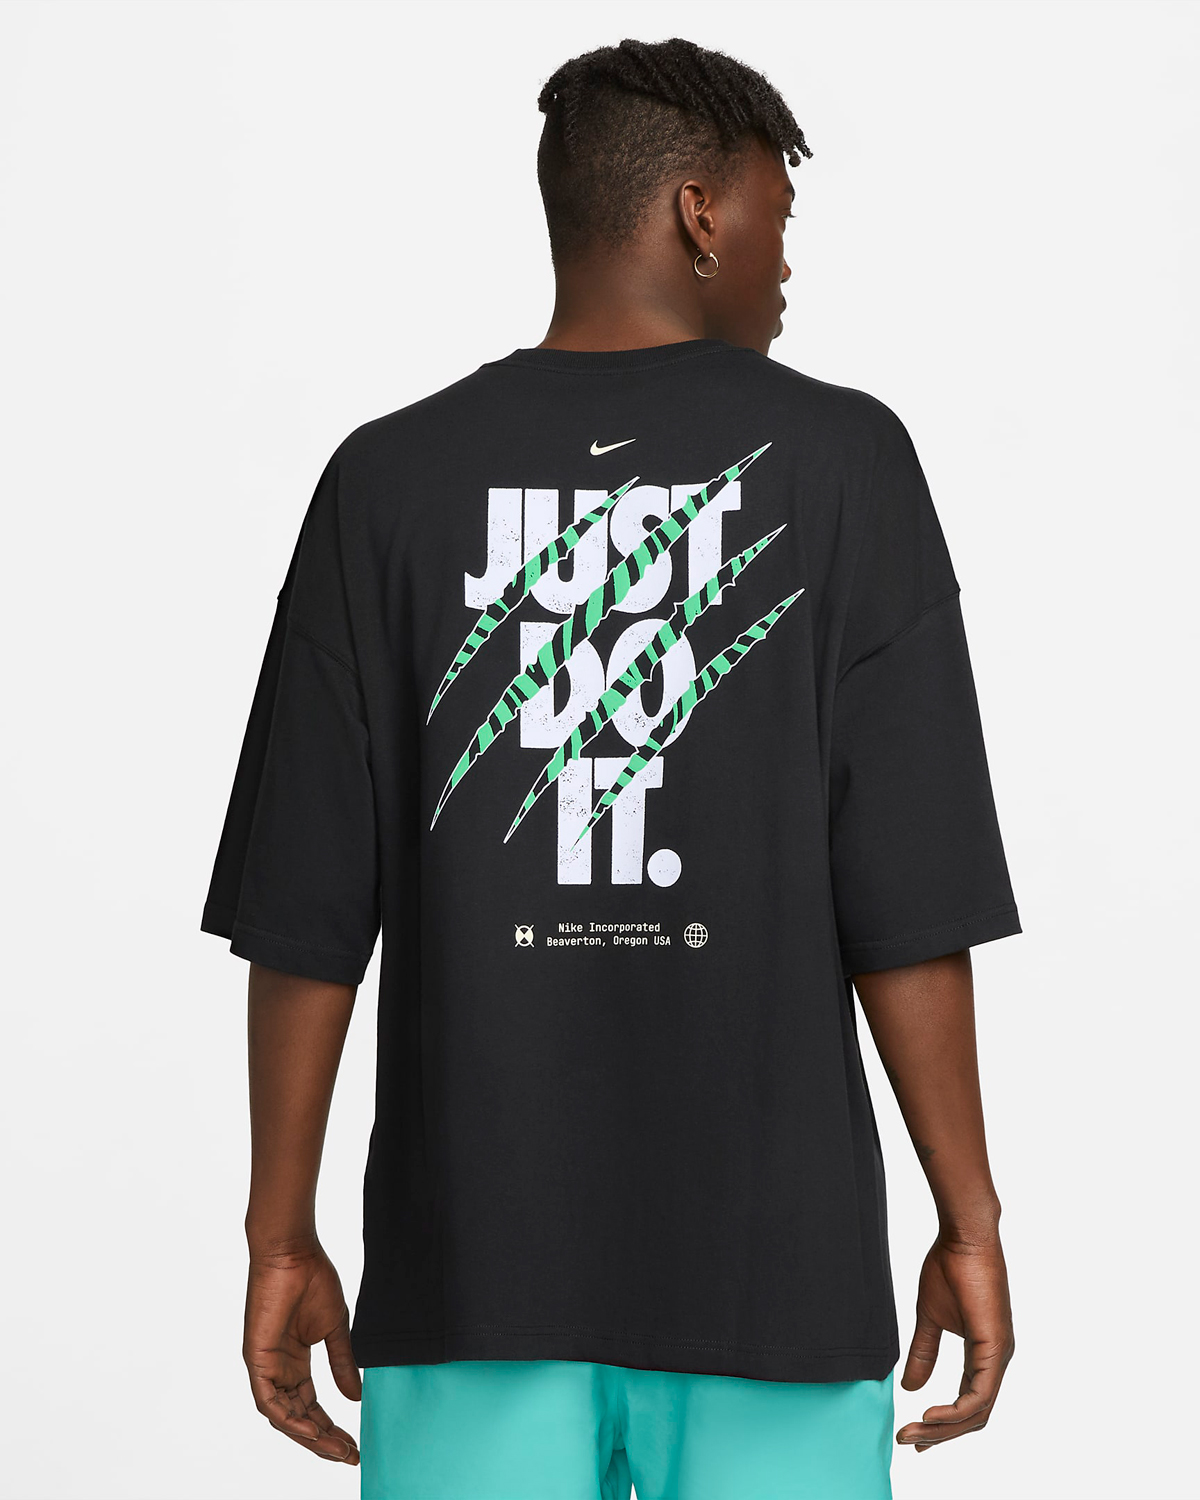 Nike-JDI-Wild-T-Shirt-Black-White-Green-2